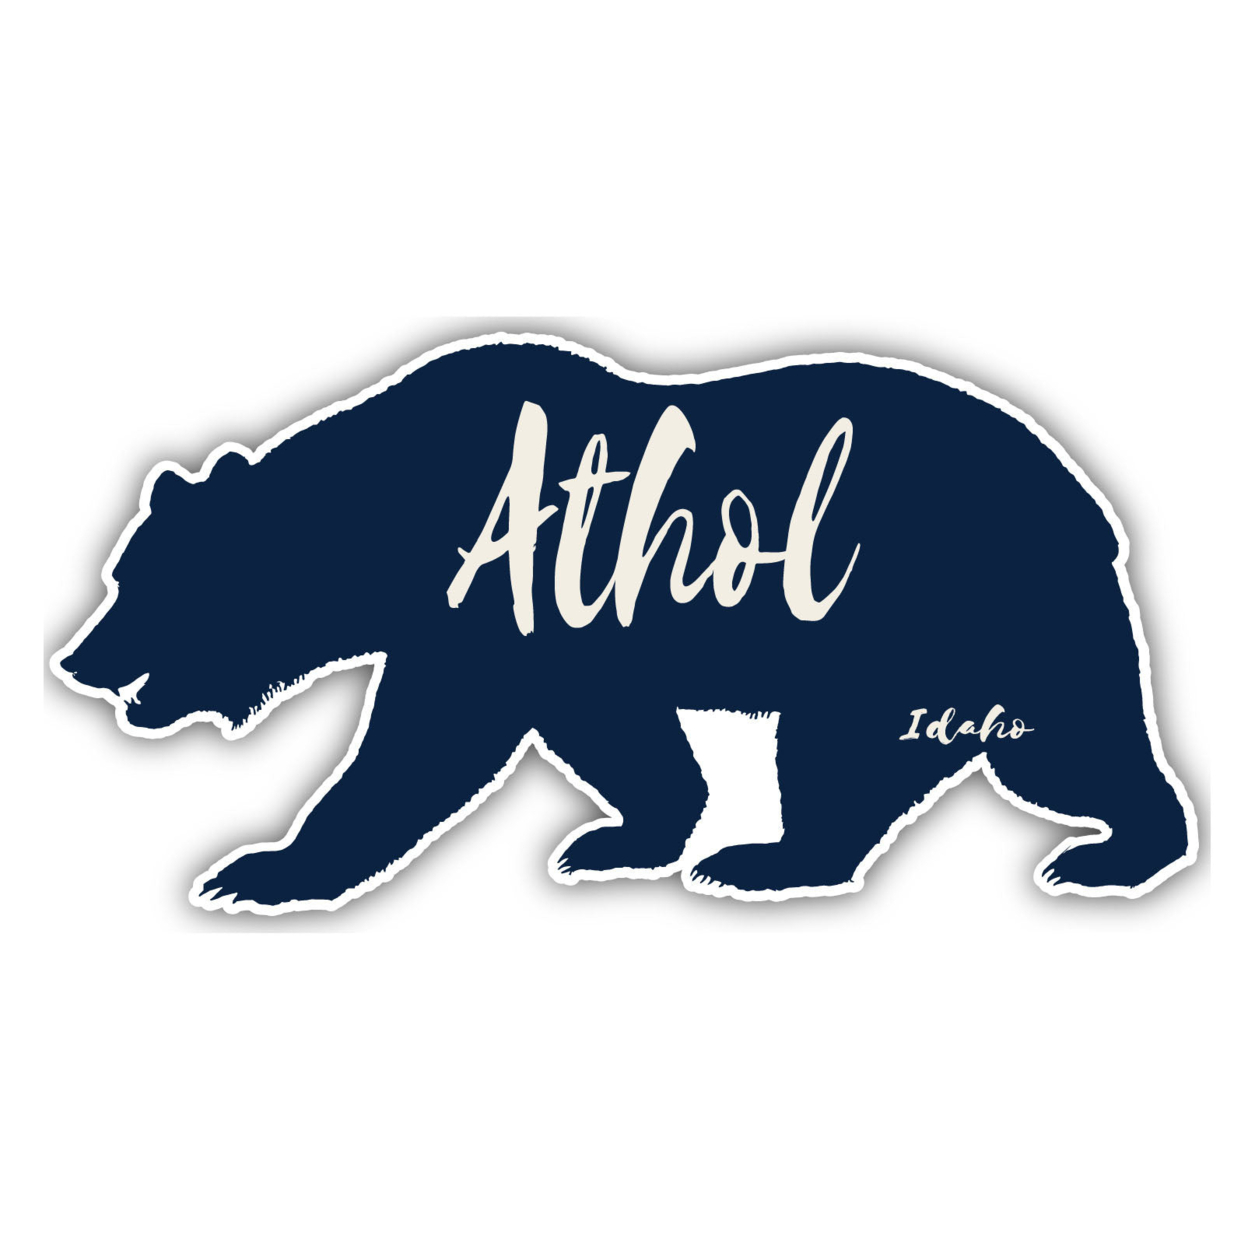 Athol Idaho Souvenir Decorative Stickers (Choose Theme And Size) - 4-Pack, 4-Inch, Bear